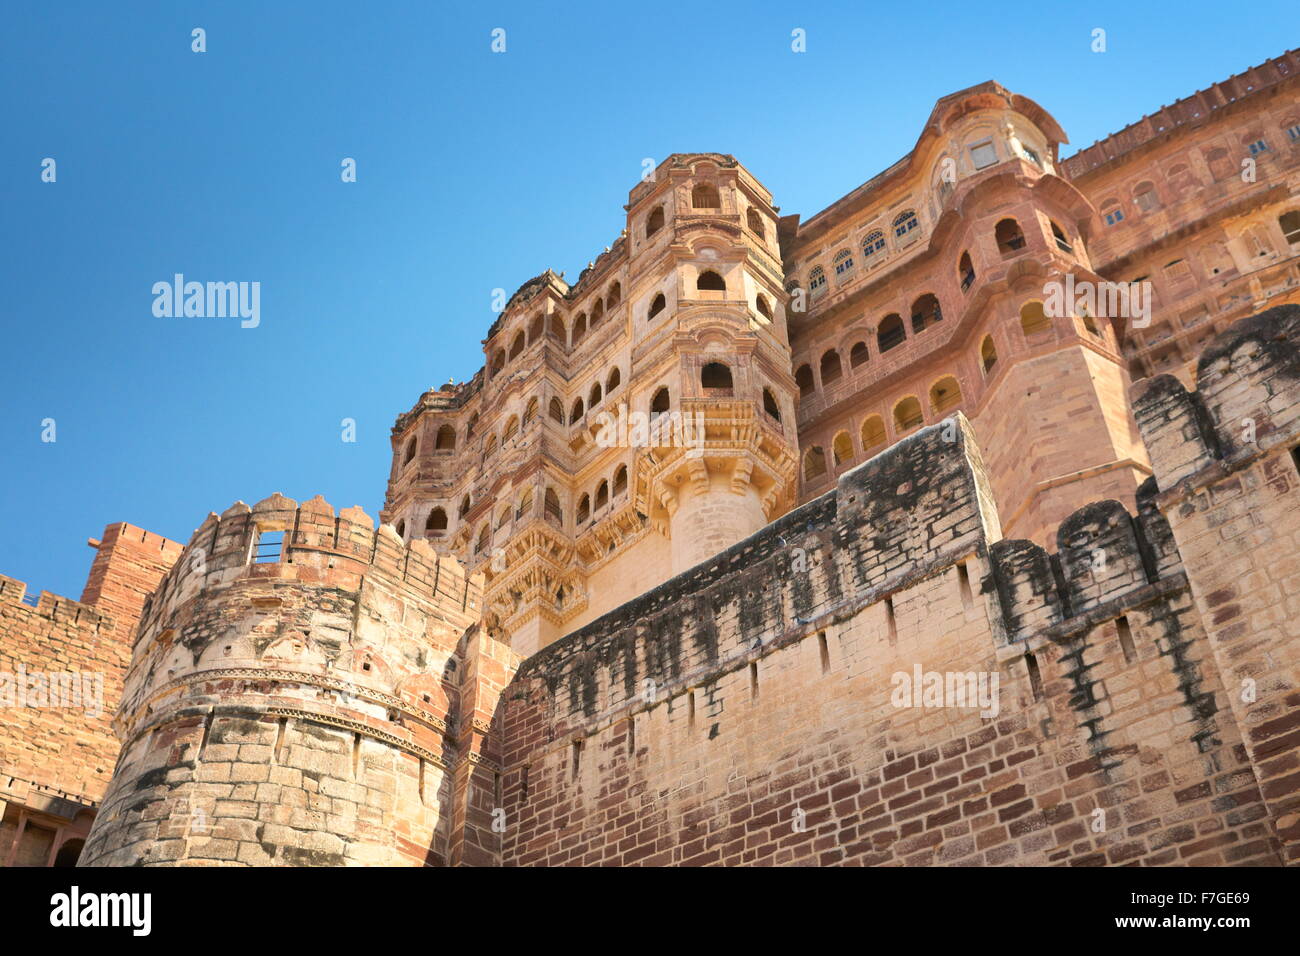 Fort Mehrangarh, Jodhpur, Rajasthan, India Banque D'Images